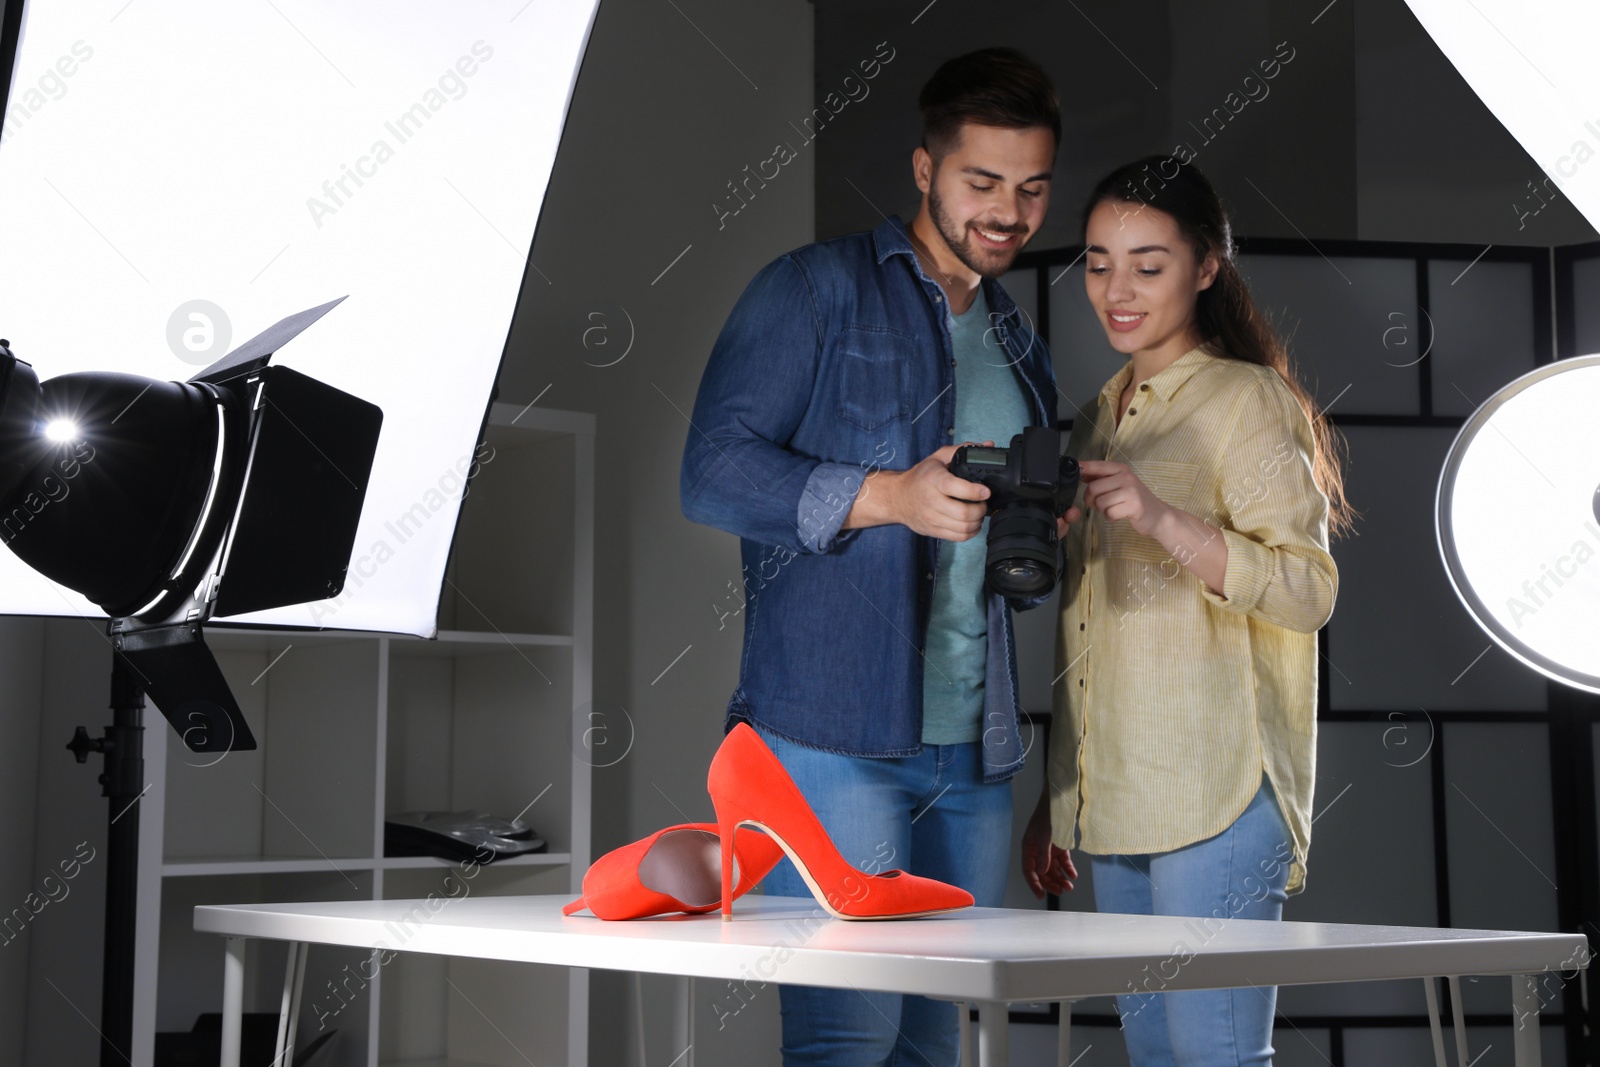 Photo of Professional photographers shooting stylish shoes in studio